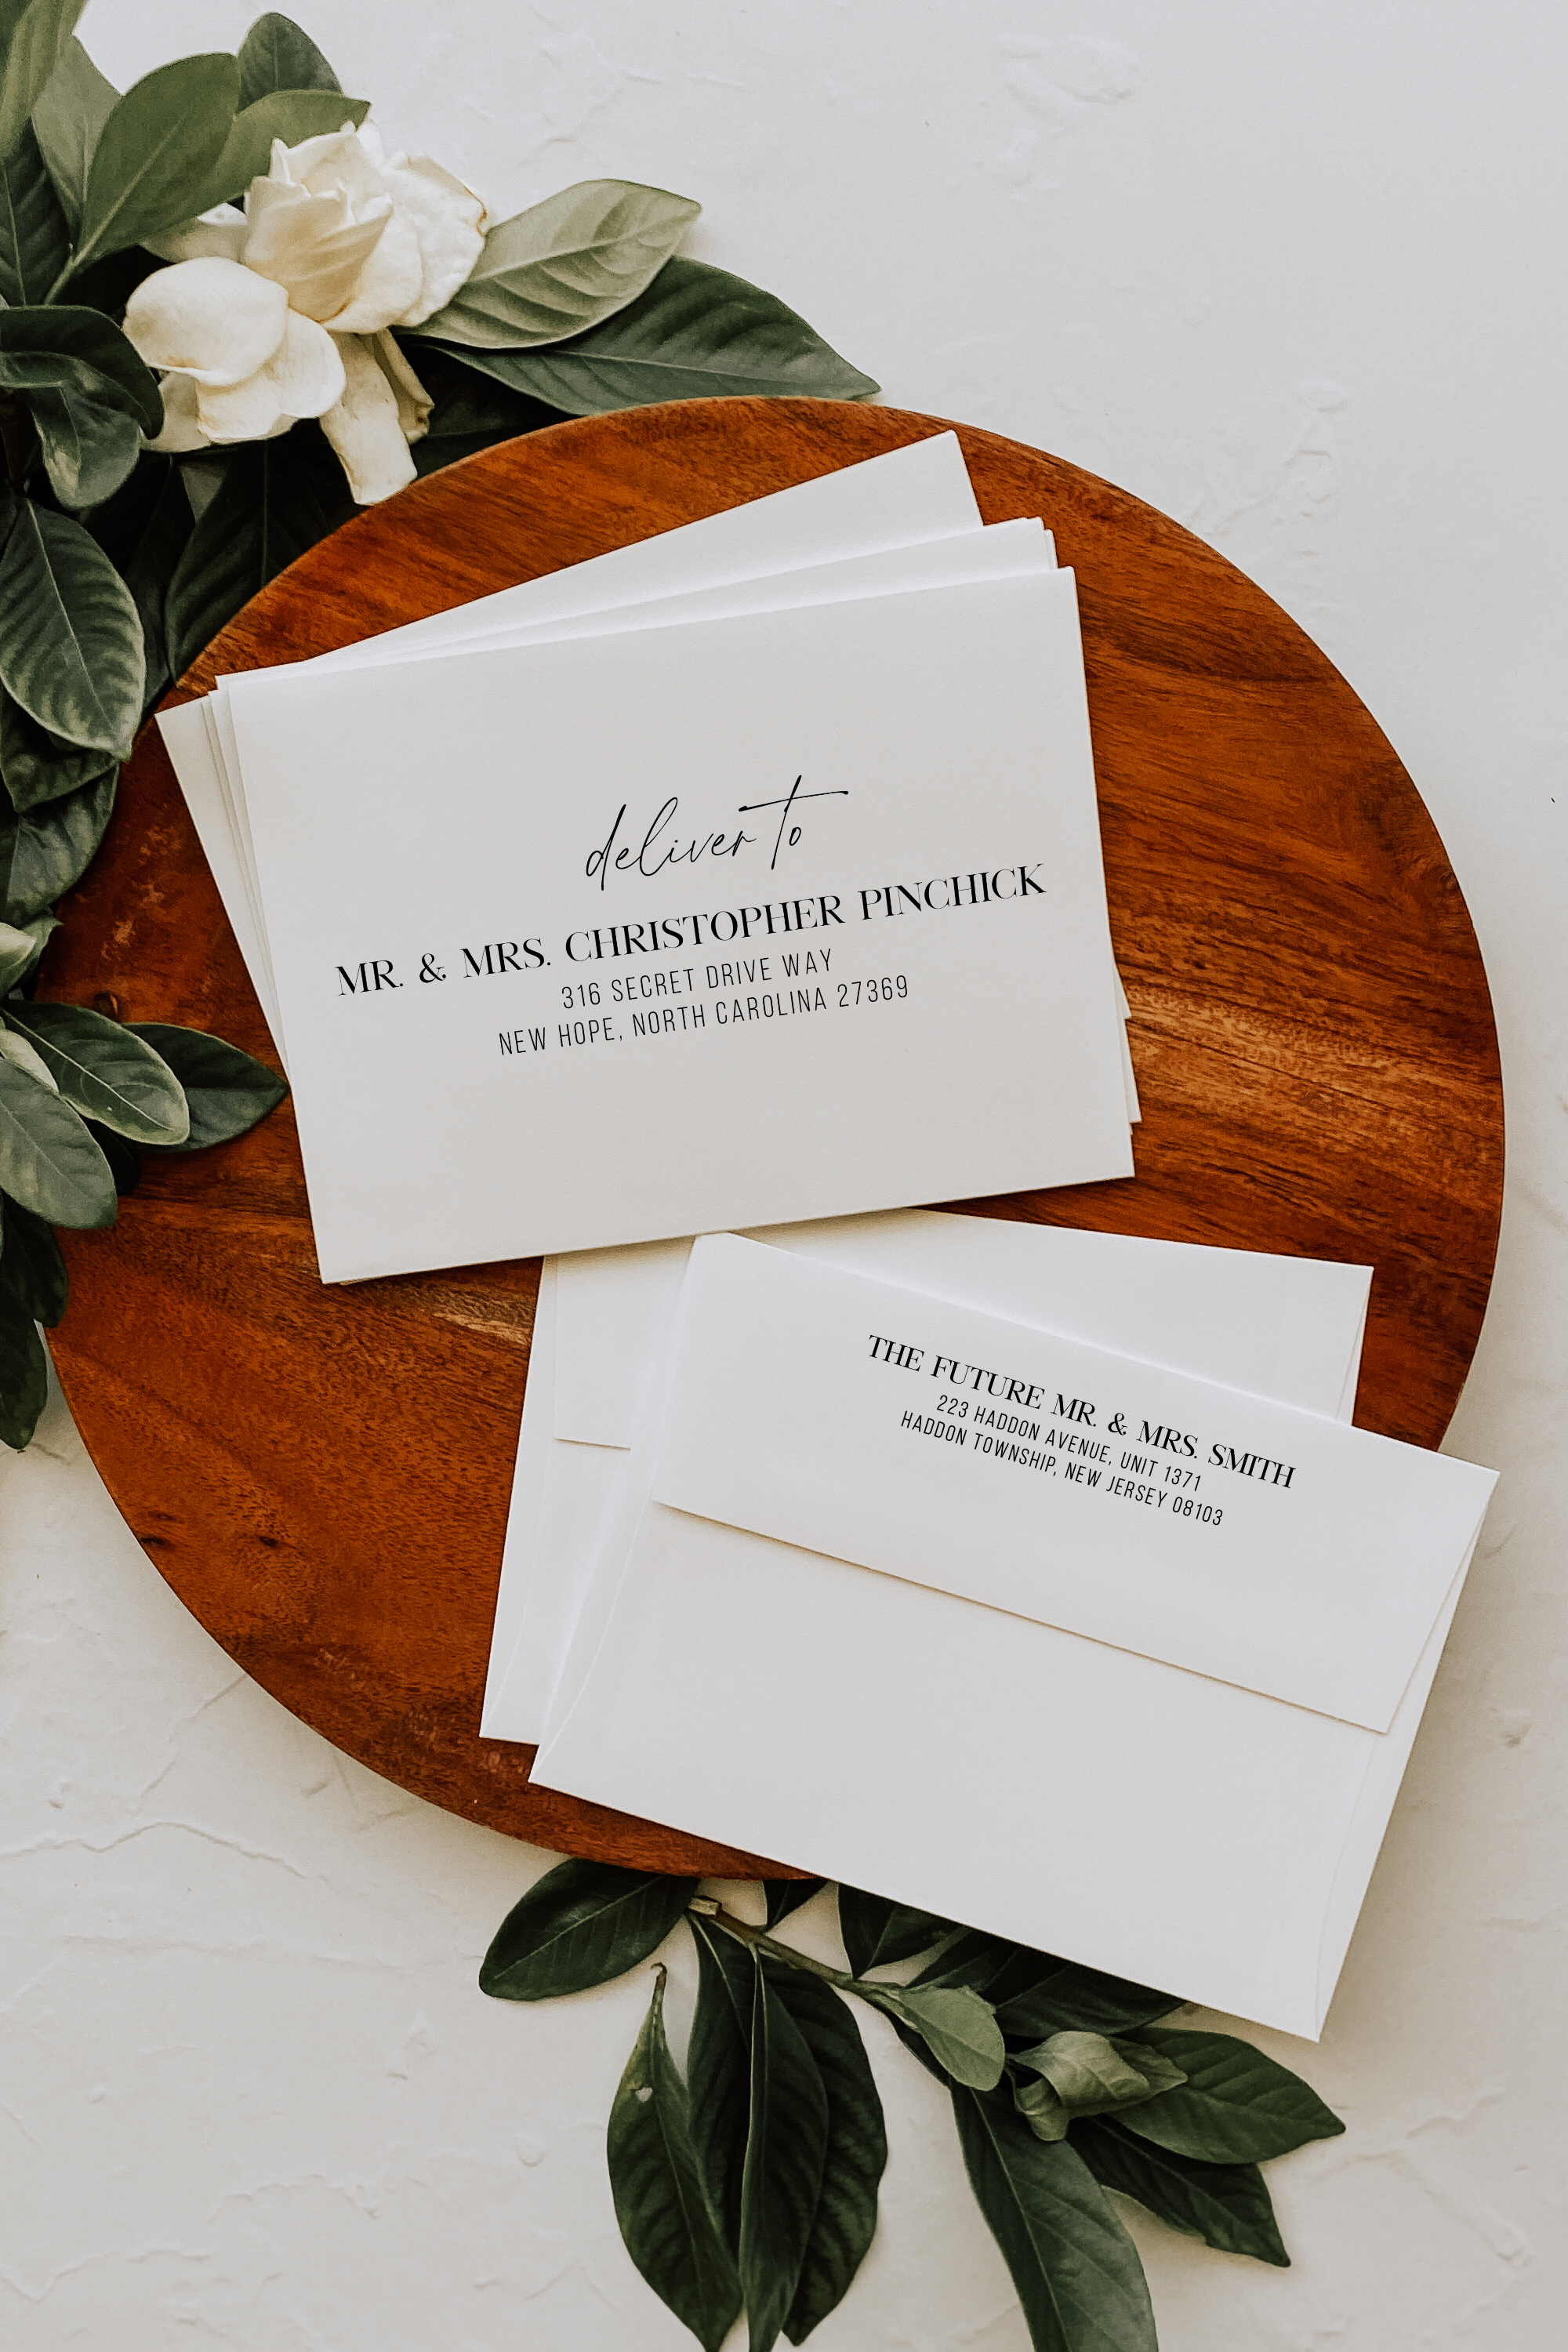 printed white straight flap envelopes